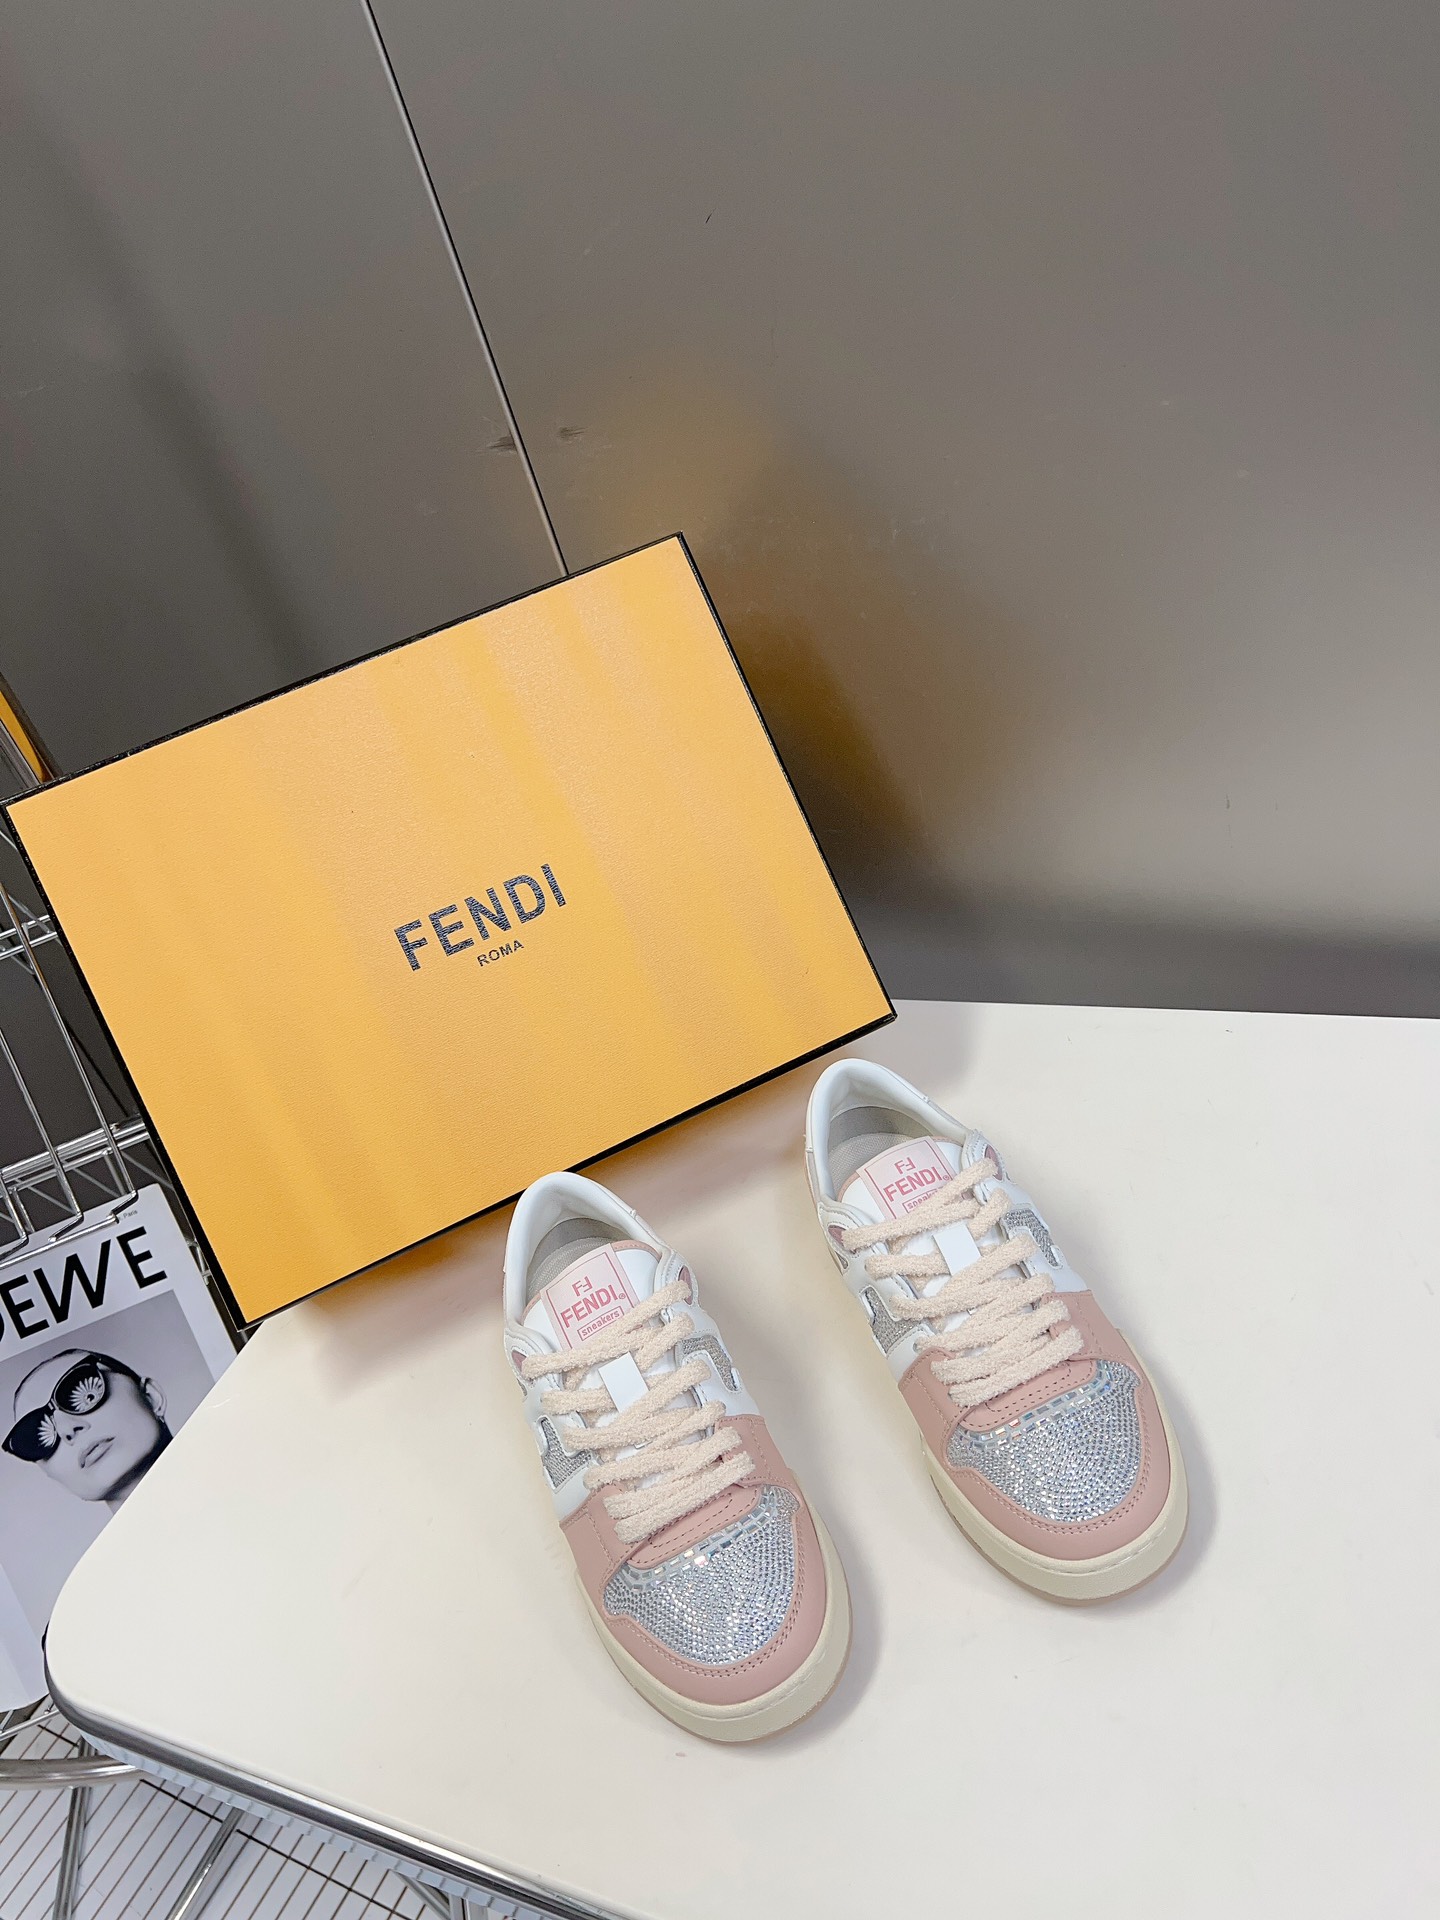 Fendi Shoes Sneakers Splicing Unisex Women Men Cowhide Vintage Casual